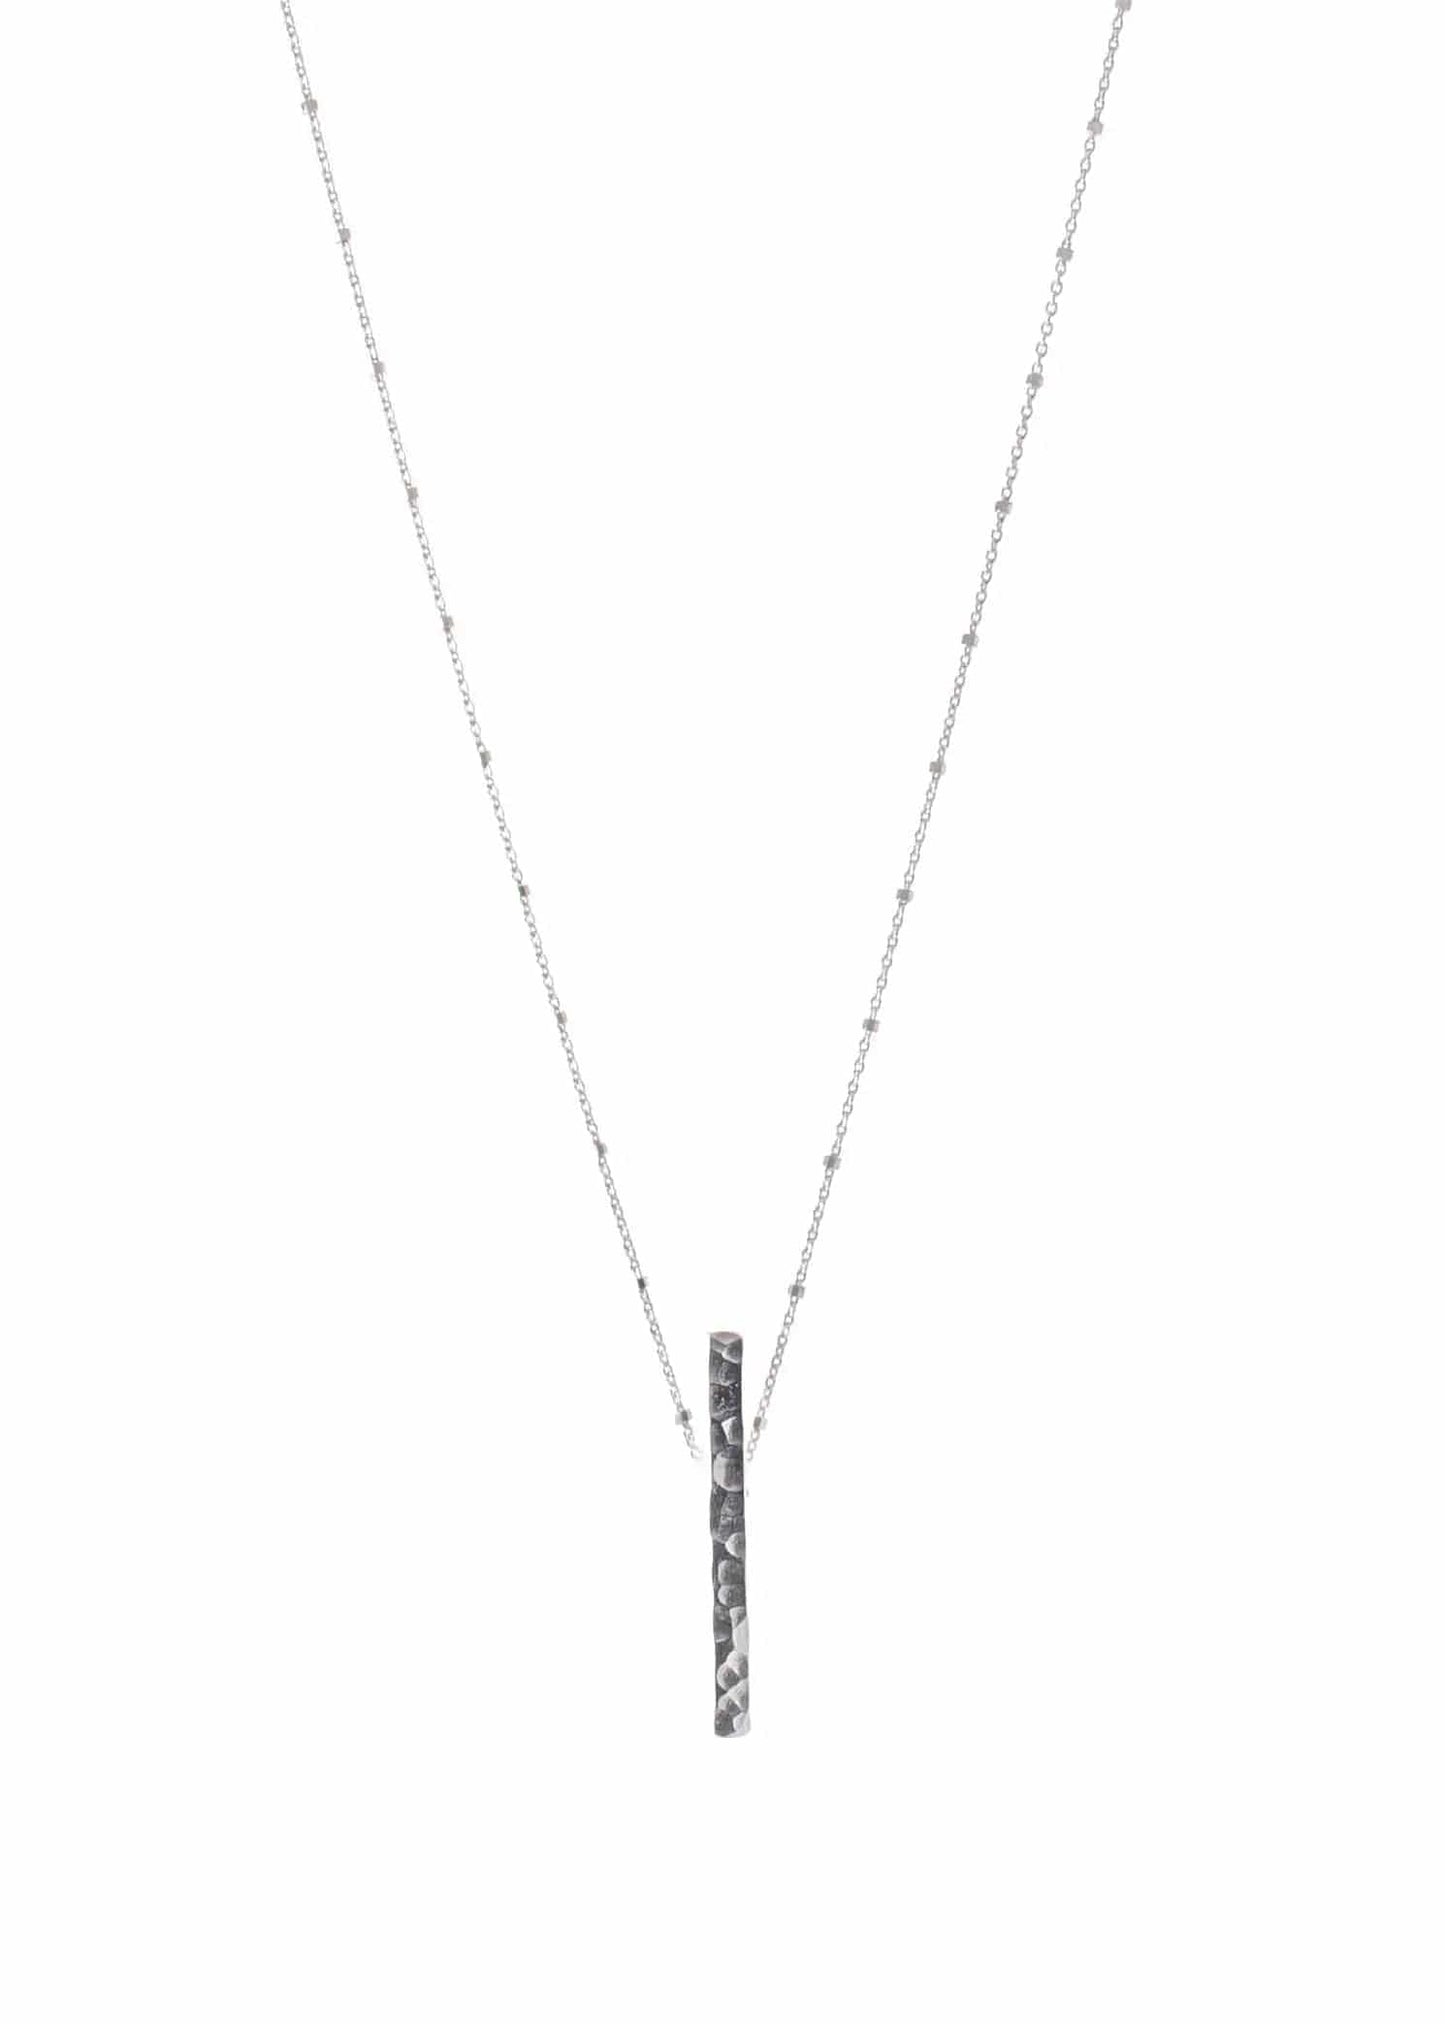 Aligned Solid Sterling Silver Bar Necklace Liv & B Designs